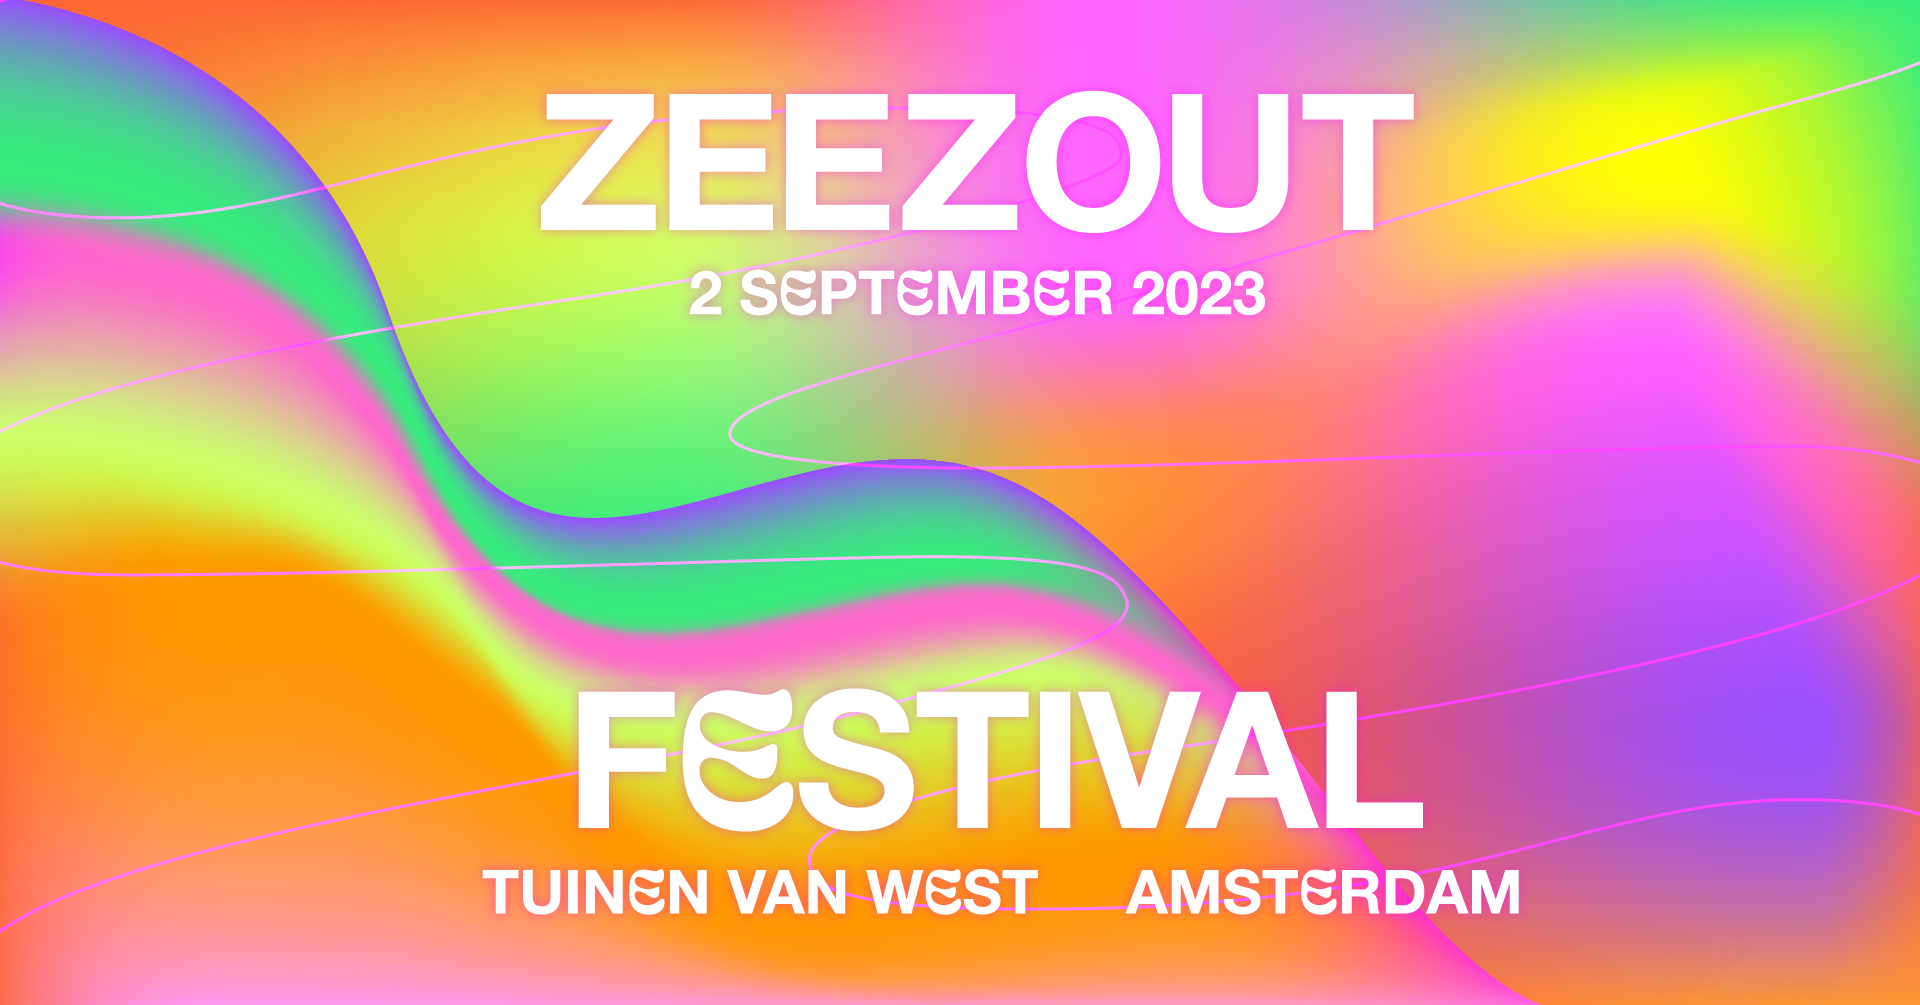 ZeeZout Festival 2023 at Tuinen van West, Amsterdam